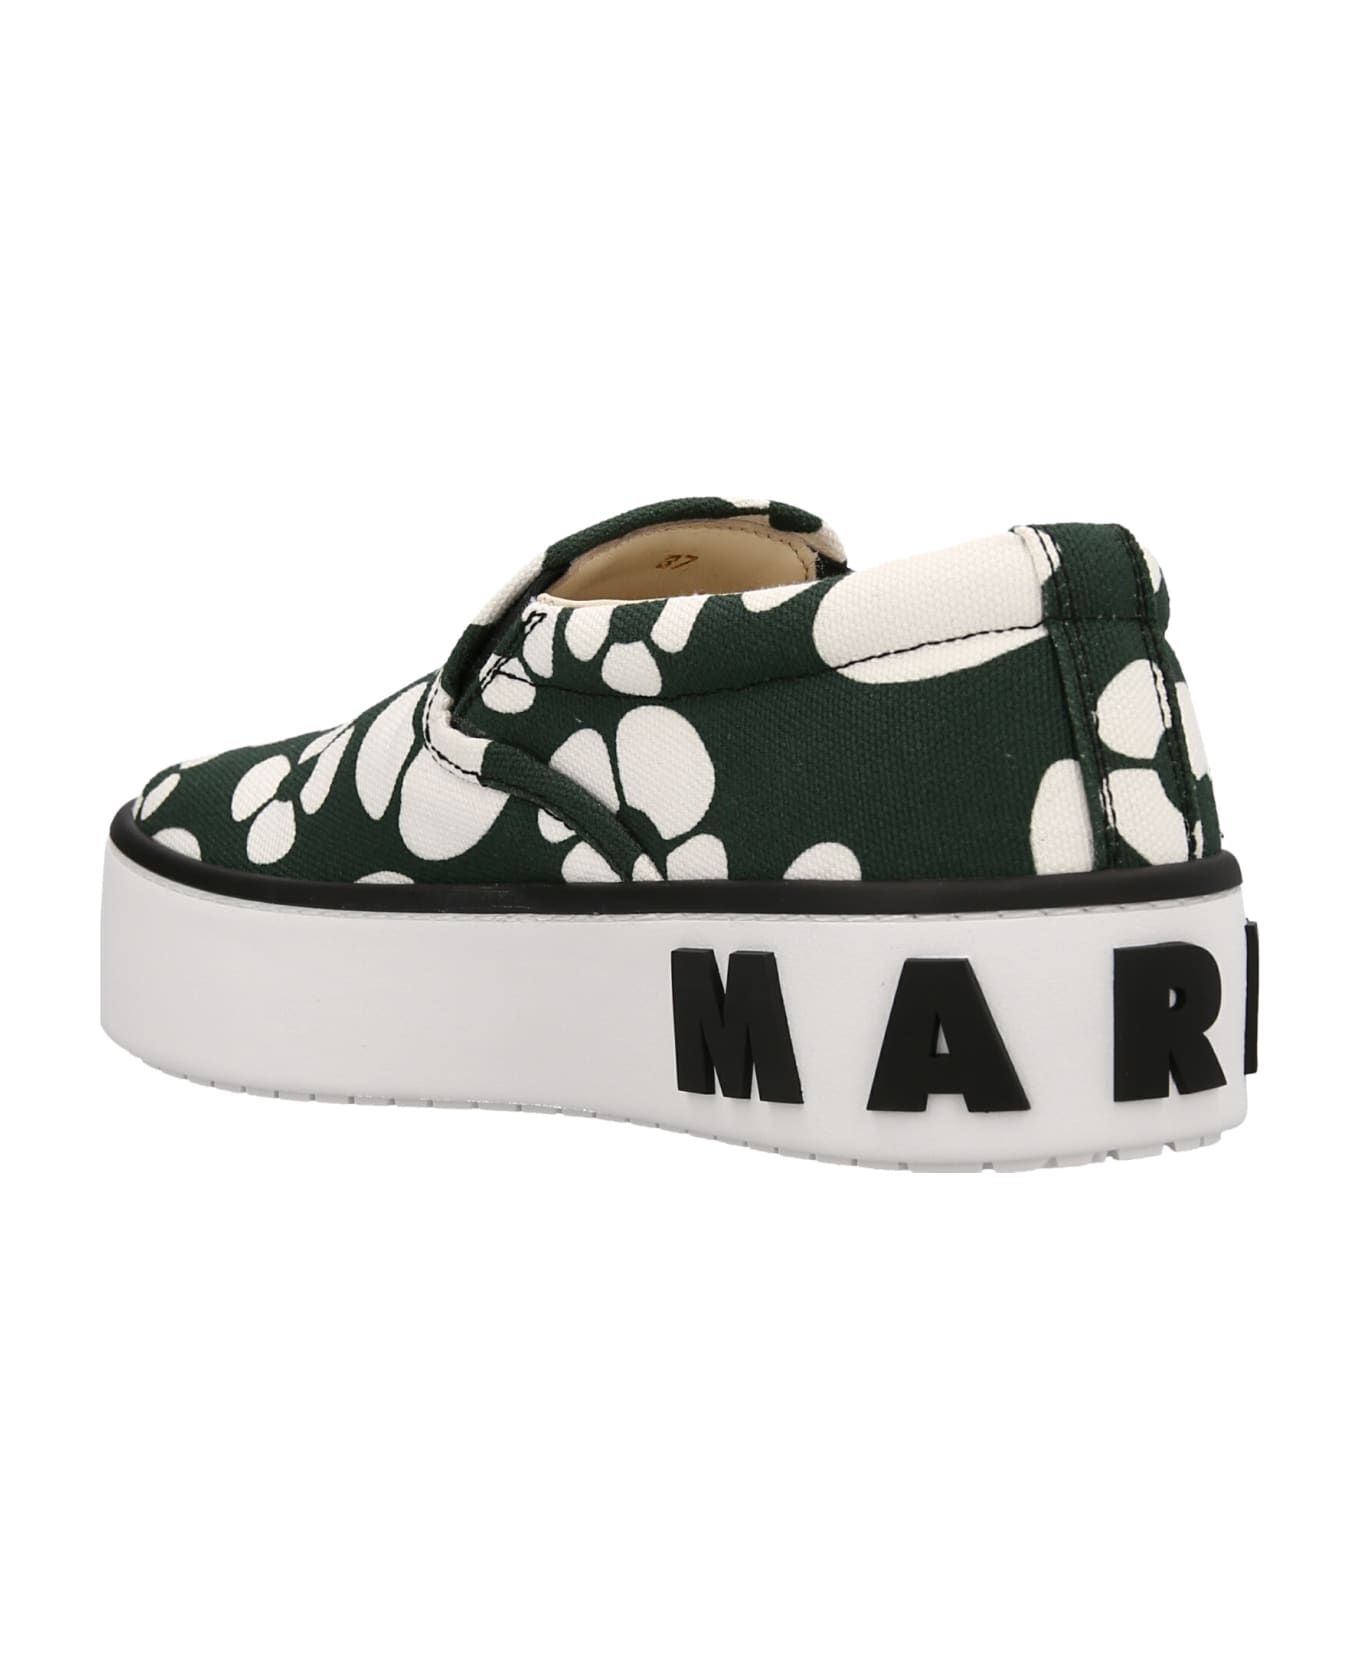 Marni X Cartergovernmentalt Sneakers - Green ウェッジシューズ